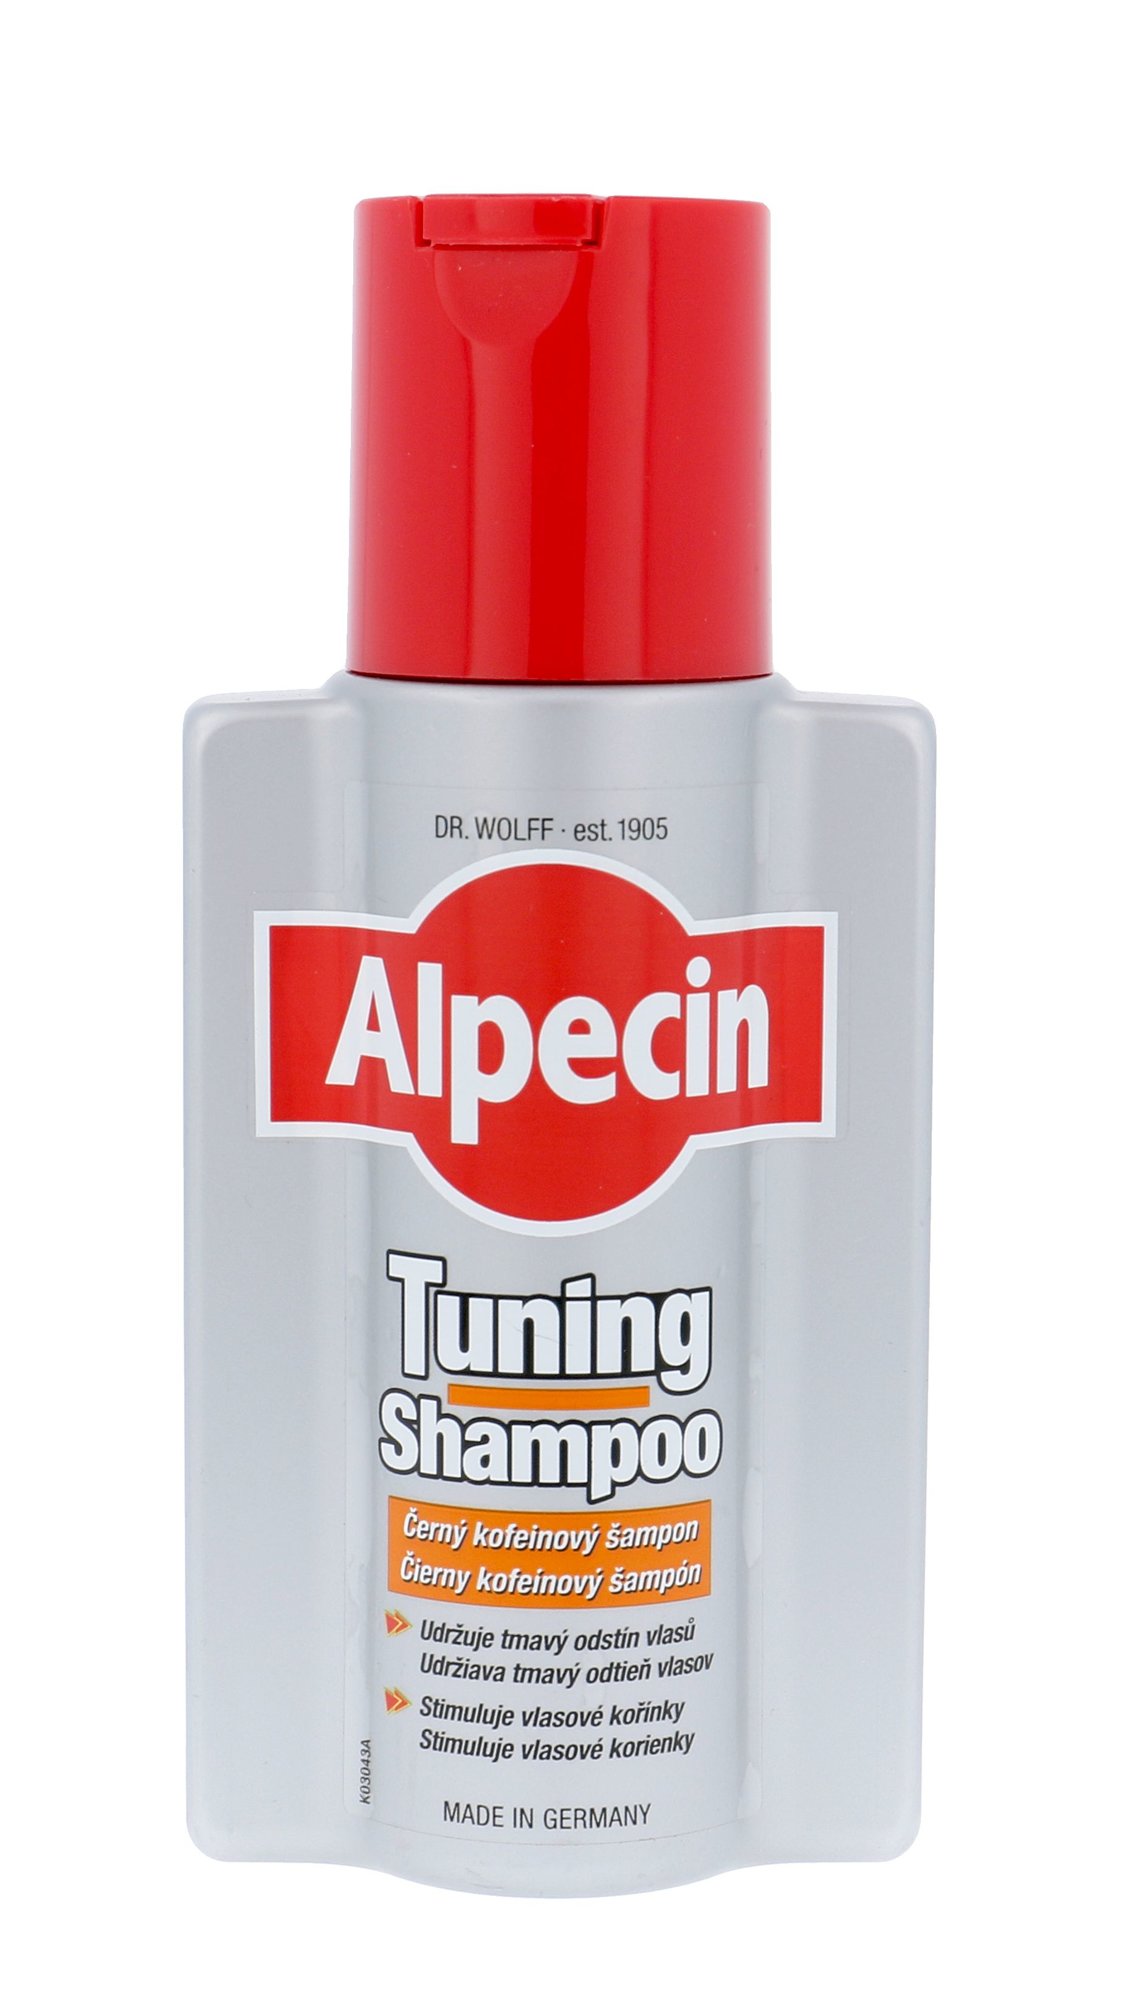 Alpecin Tuning Shampoo šampūnas